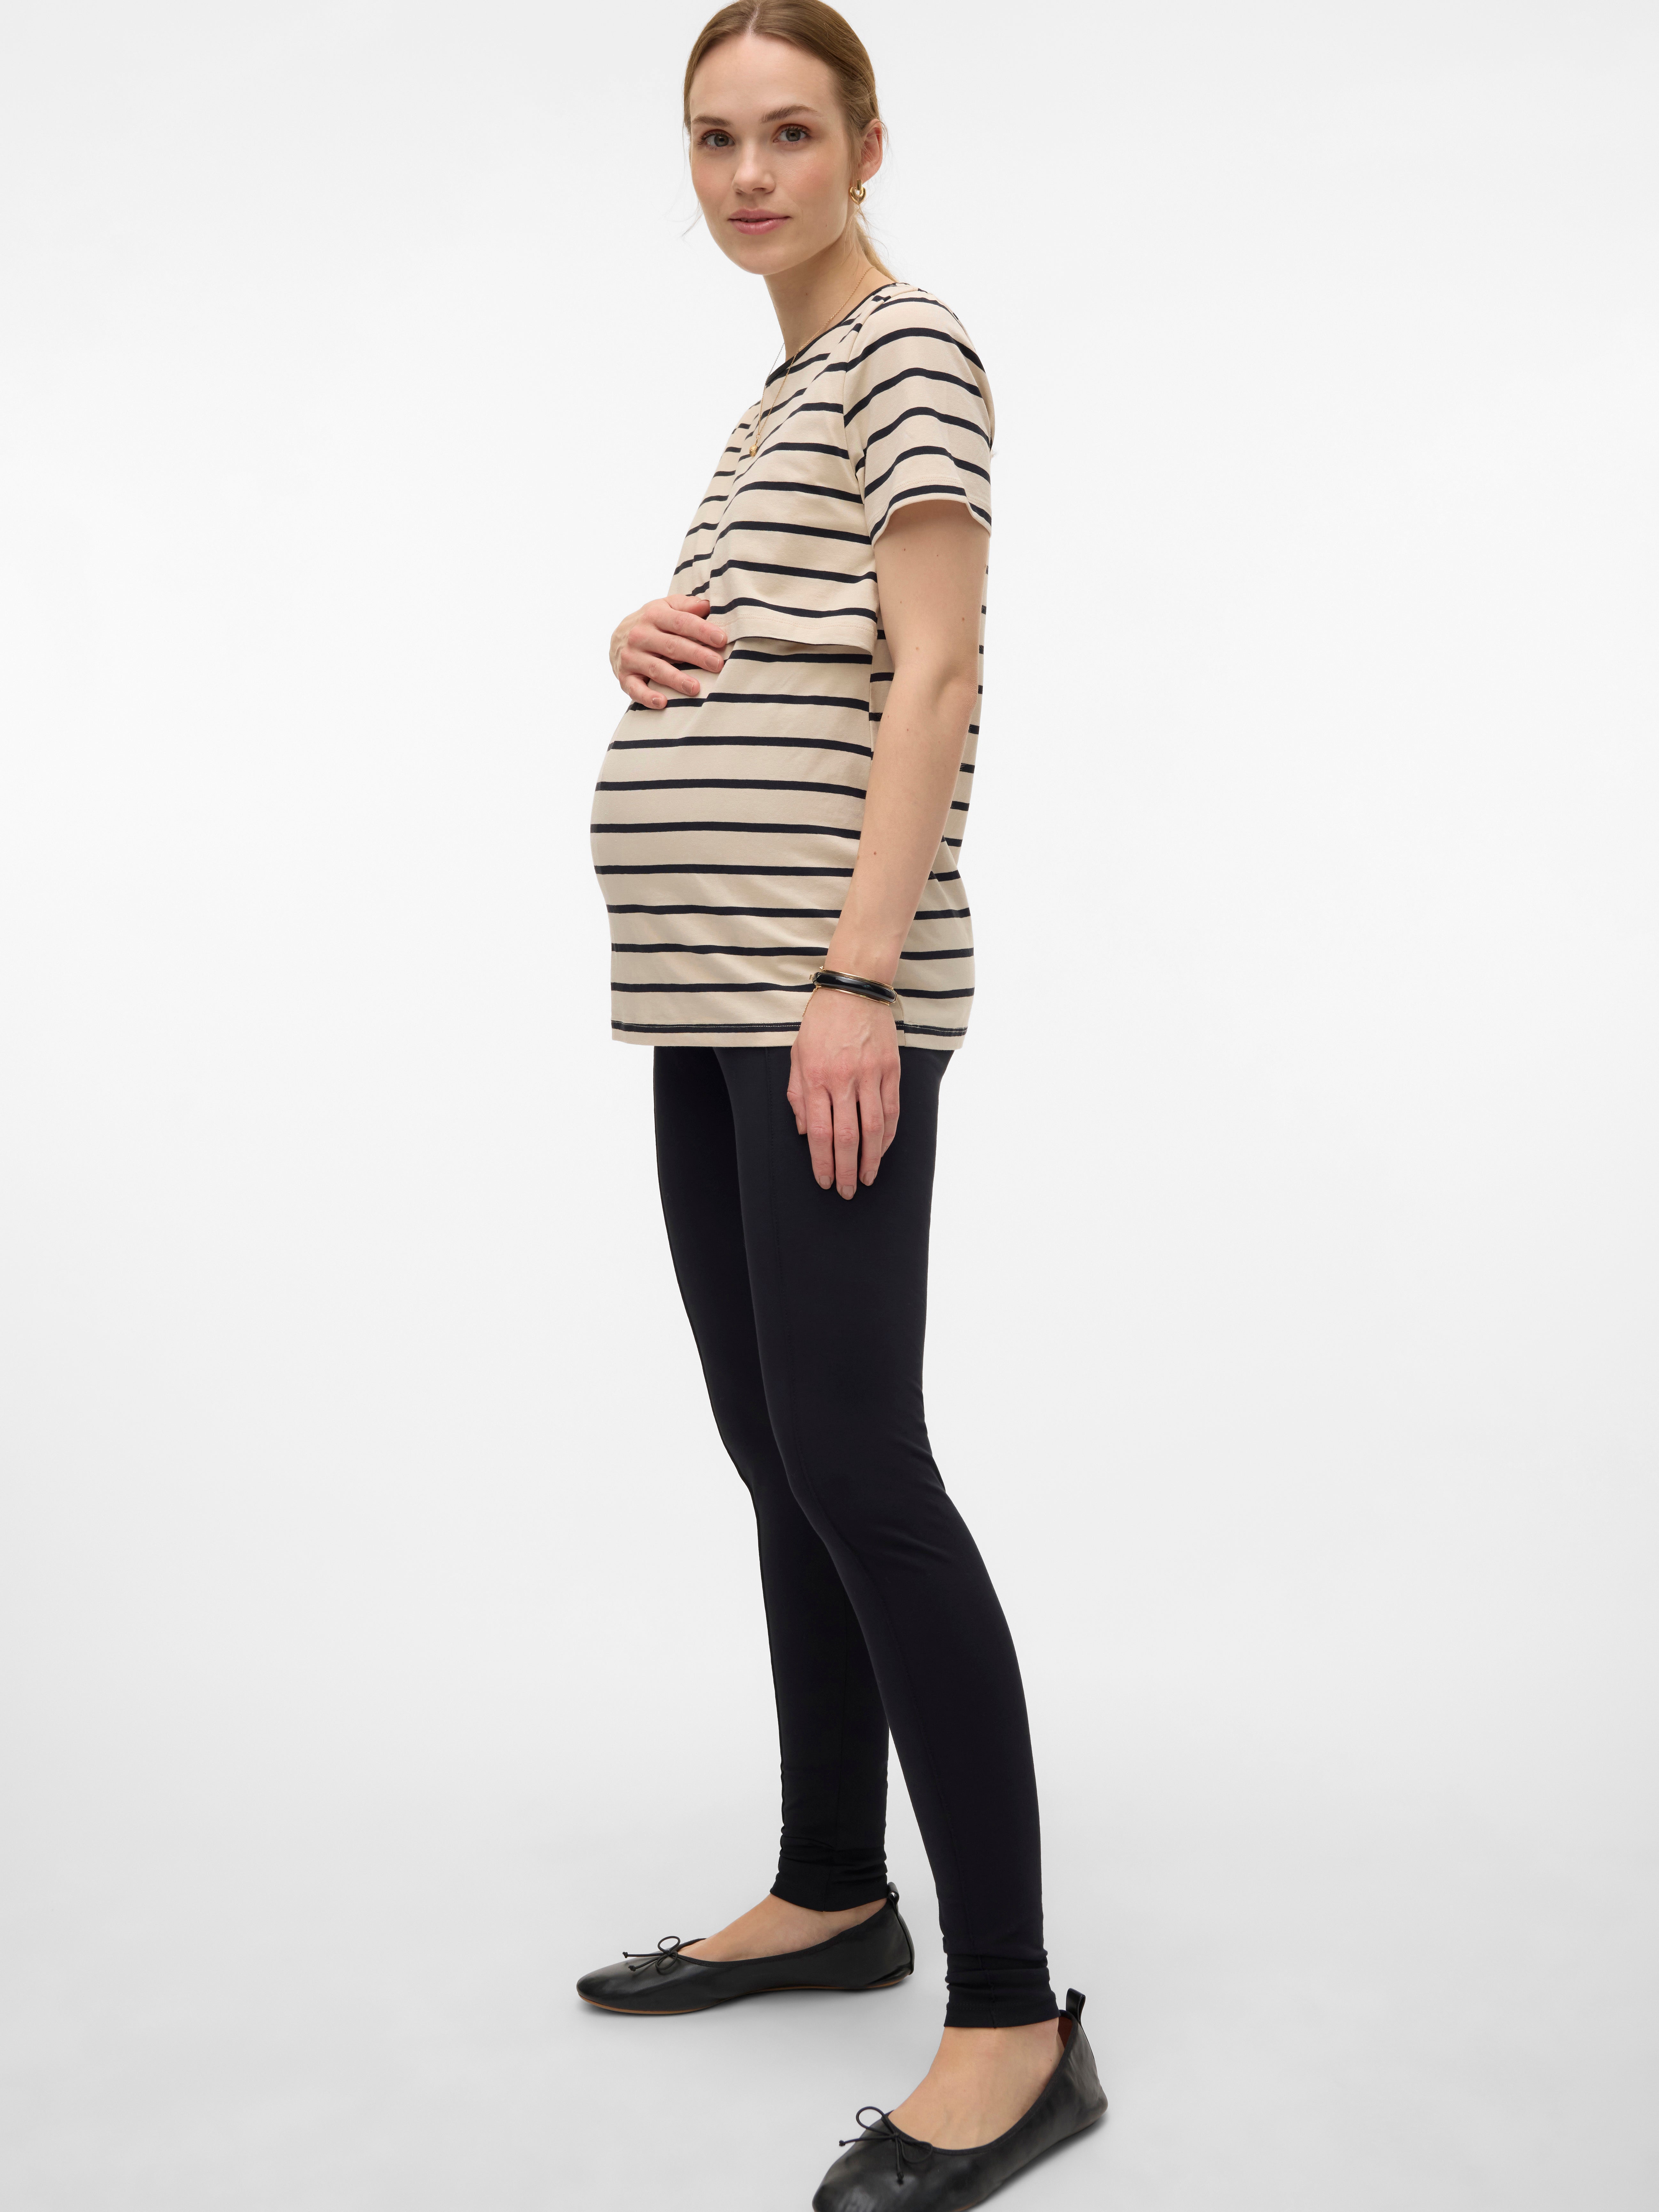 Freerider Co. Maternity Bump Support Leggings - Black | Natural Baby Shower